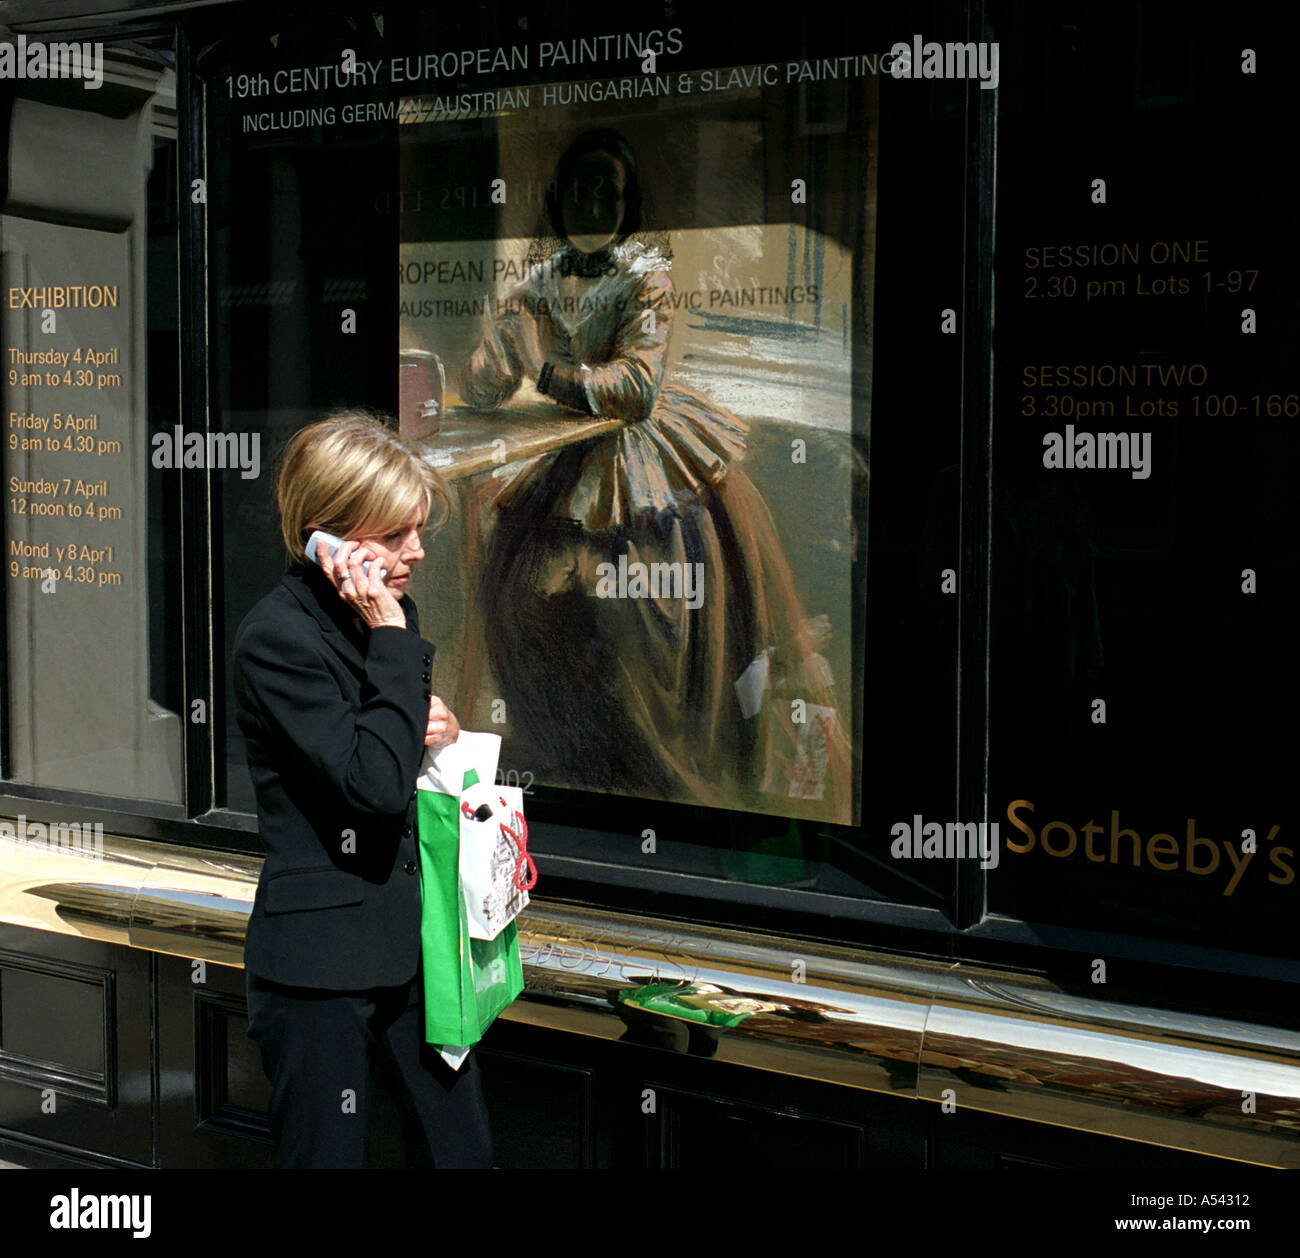 Sothebys fine art auction house facade and mobile phone user Bond Street London  Stock Photo